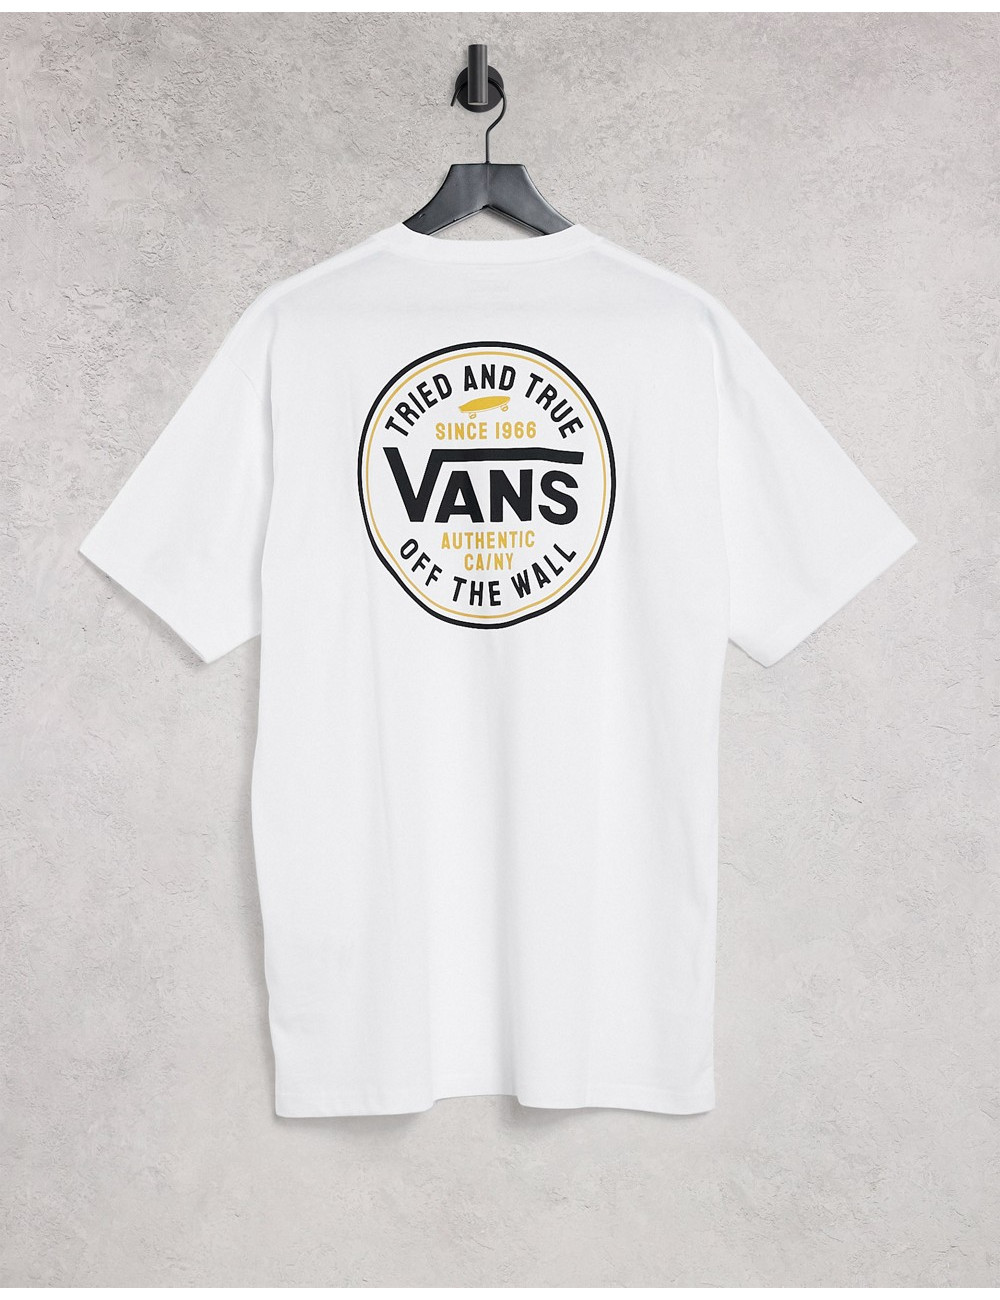 Vans Tried and True t-shirt...